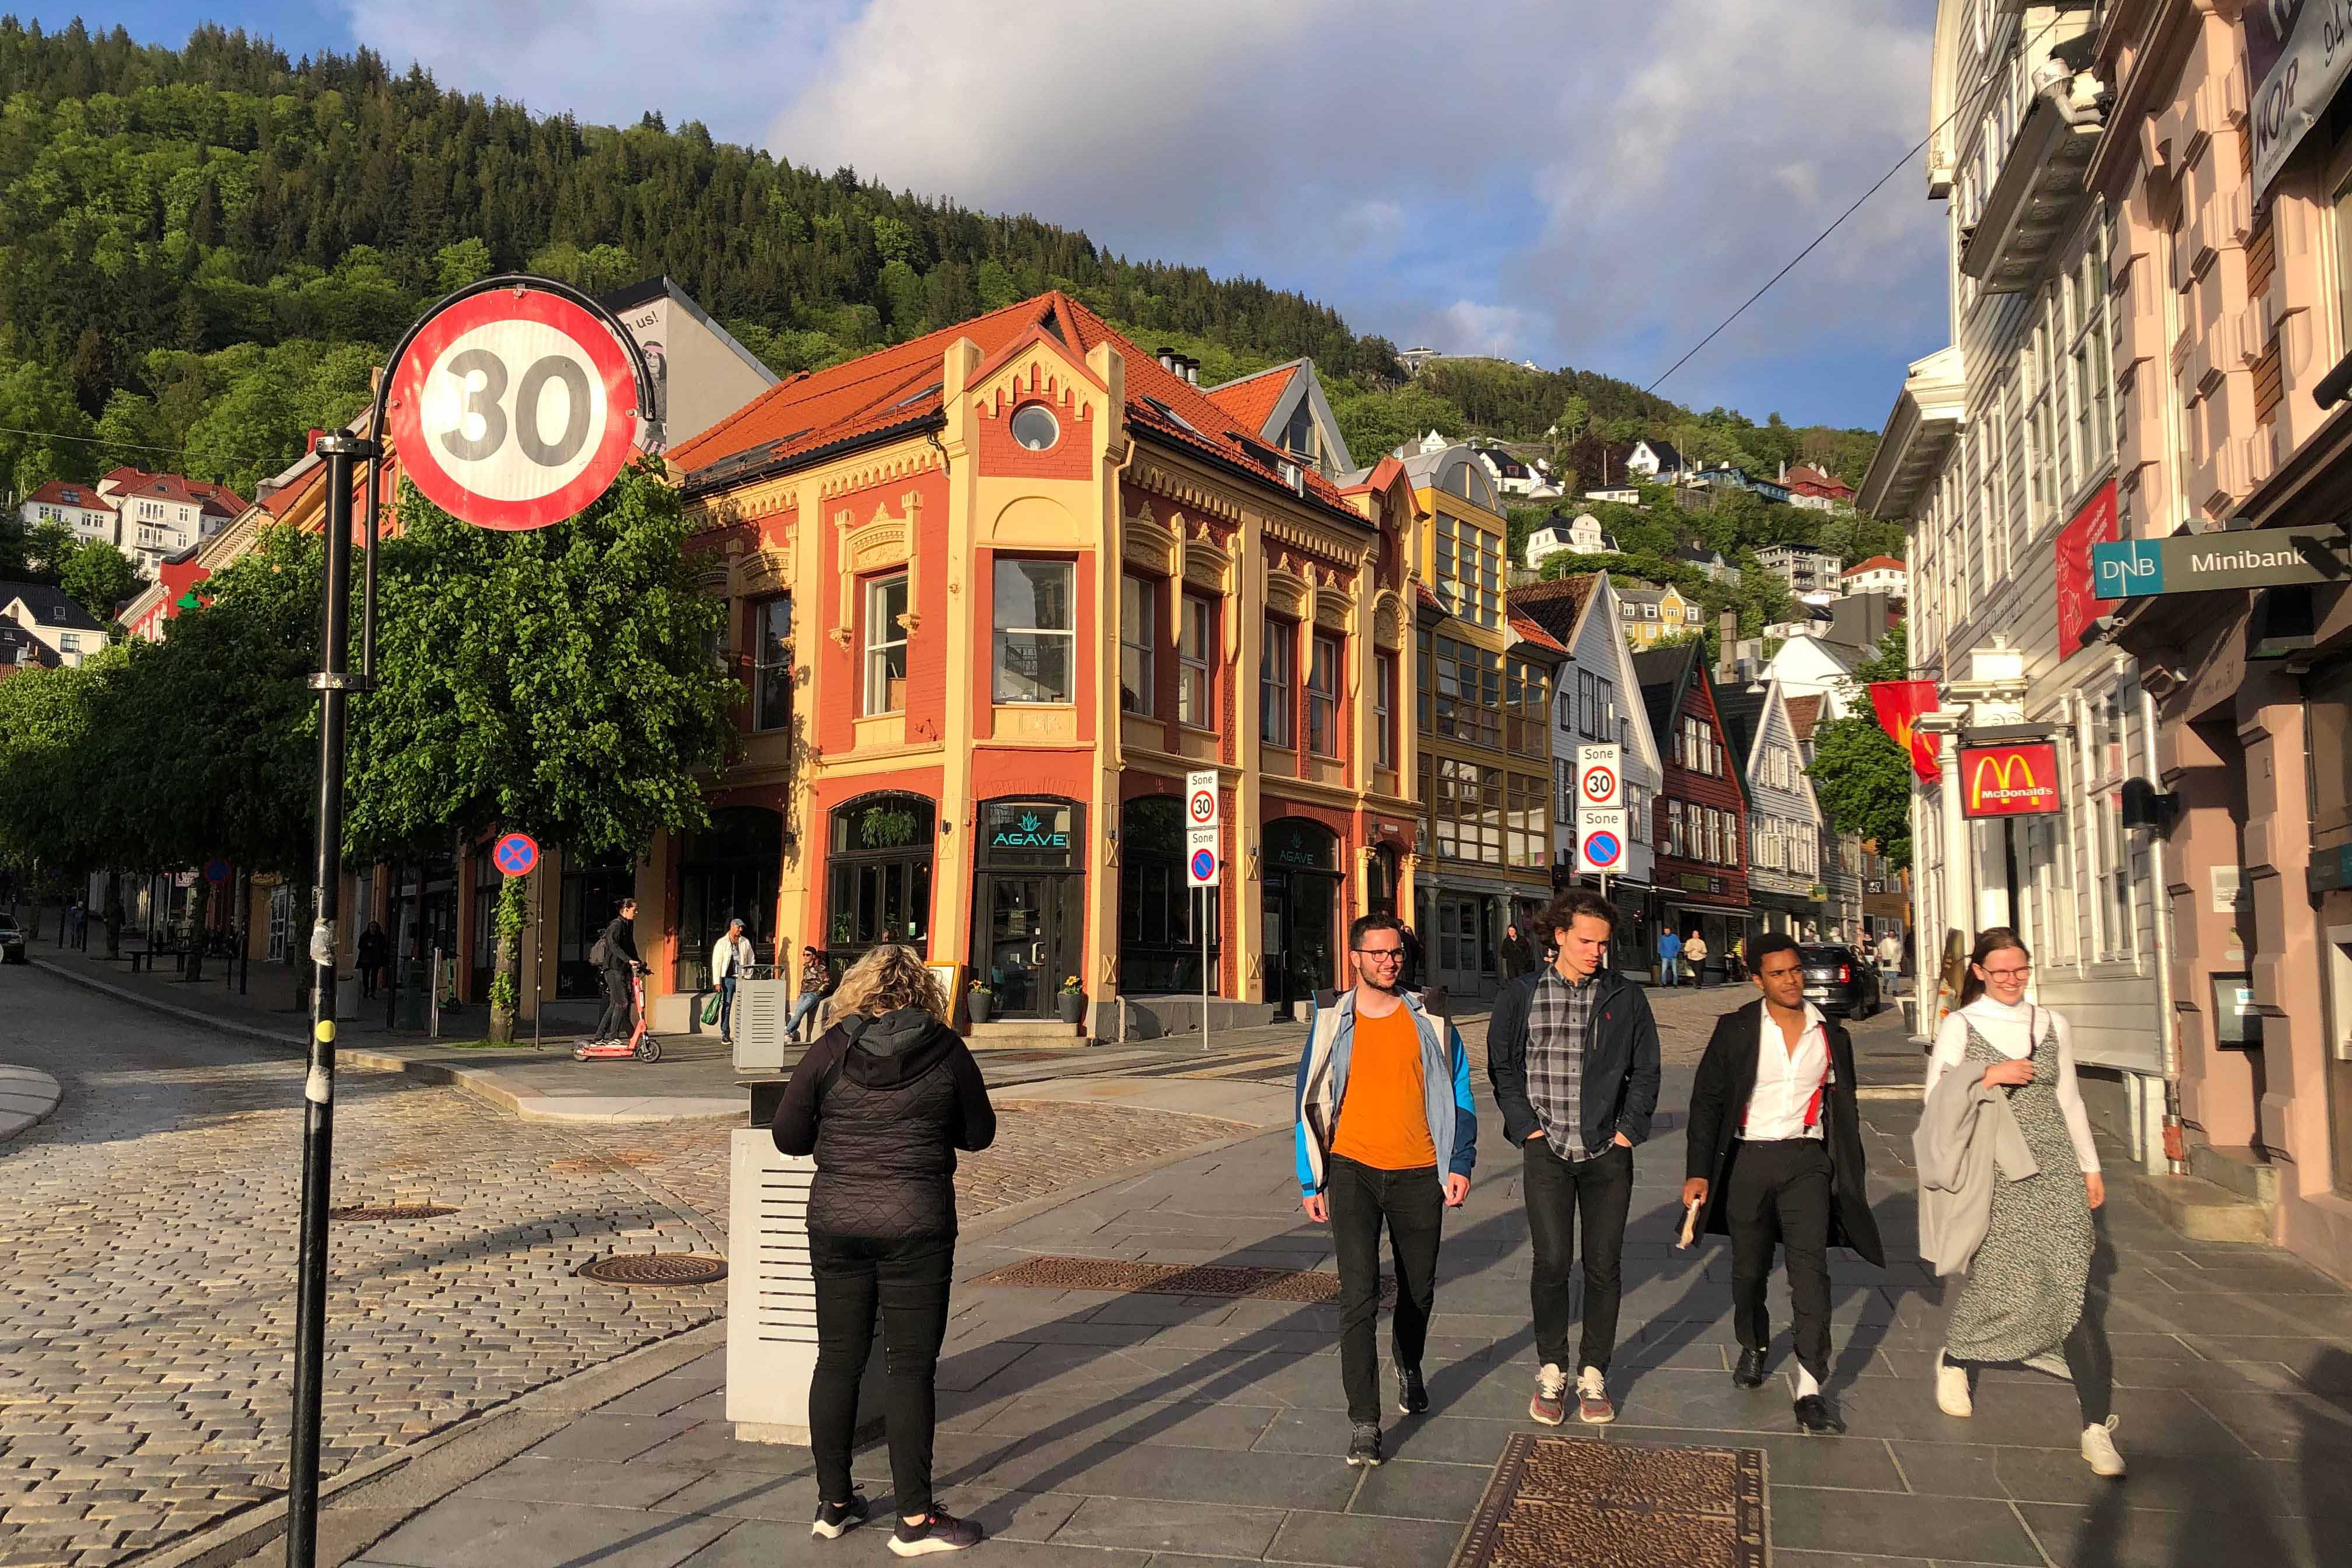 Walking down the streets of Bergen, Norway